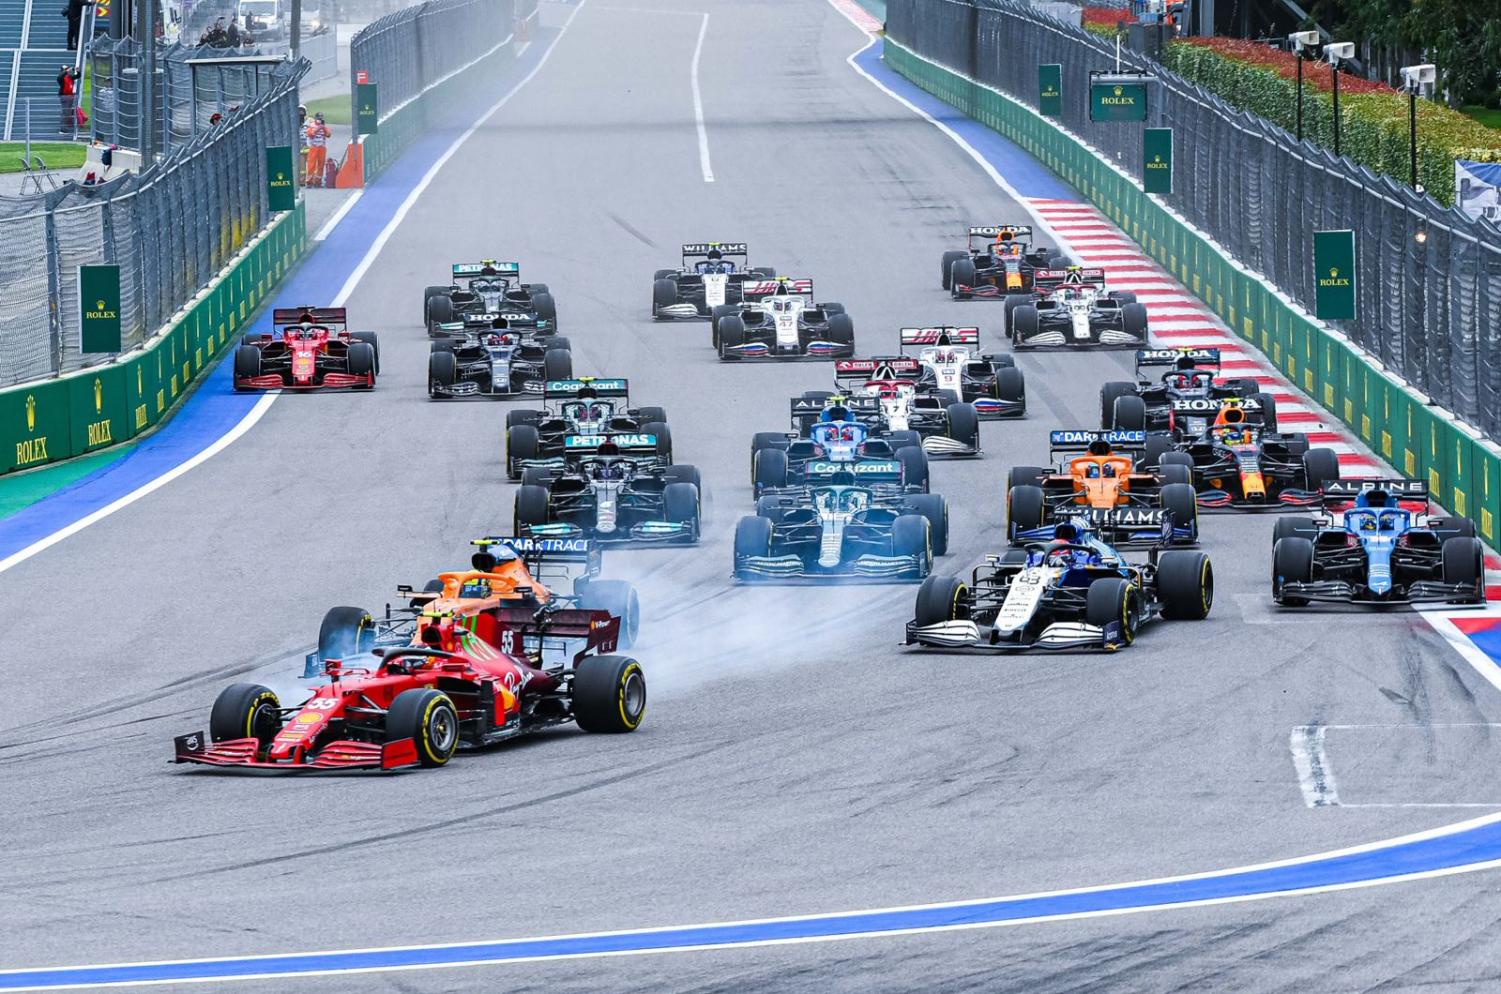 Sochi Autodrom reveals the 2014 Formula 1 Russian Grand Prix trophy